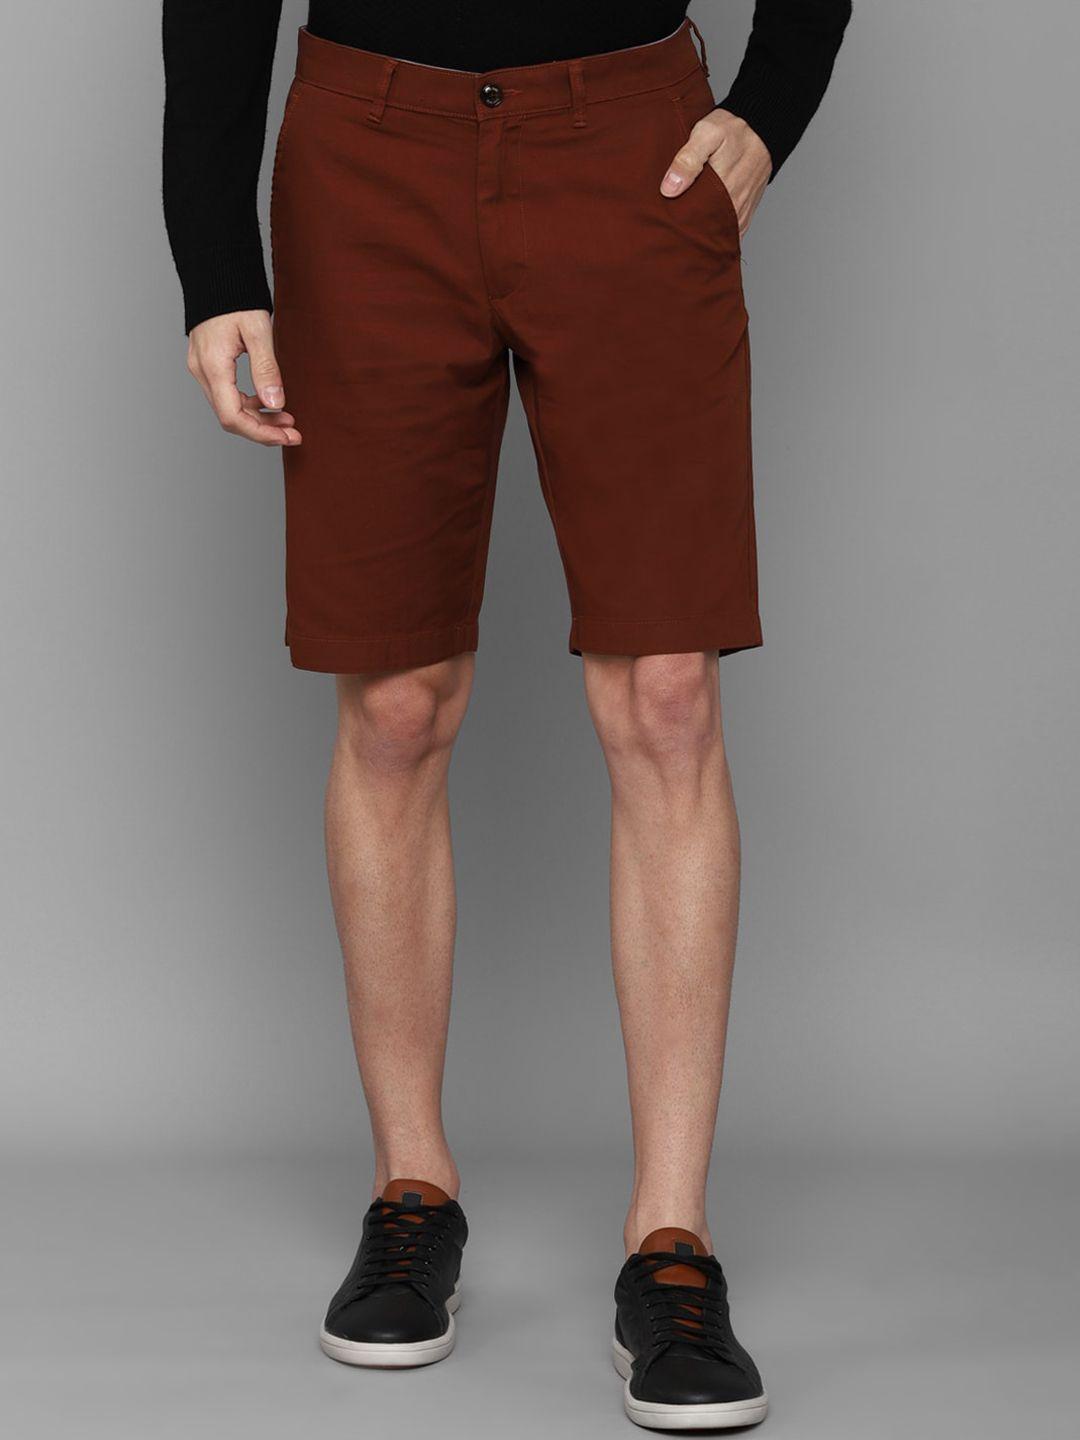 allen-solly-men-red-slim-fit-shorts